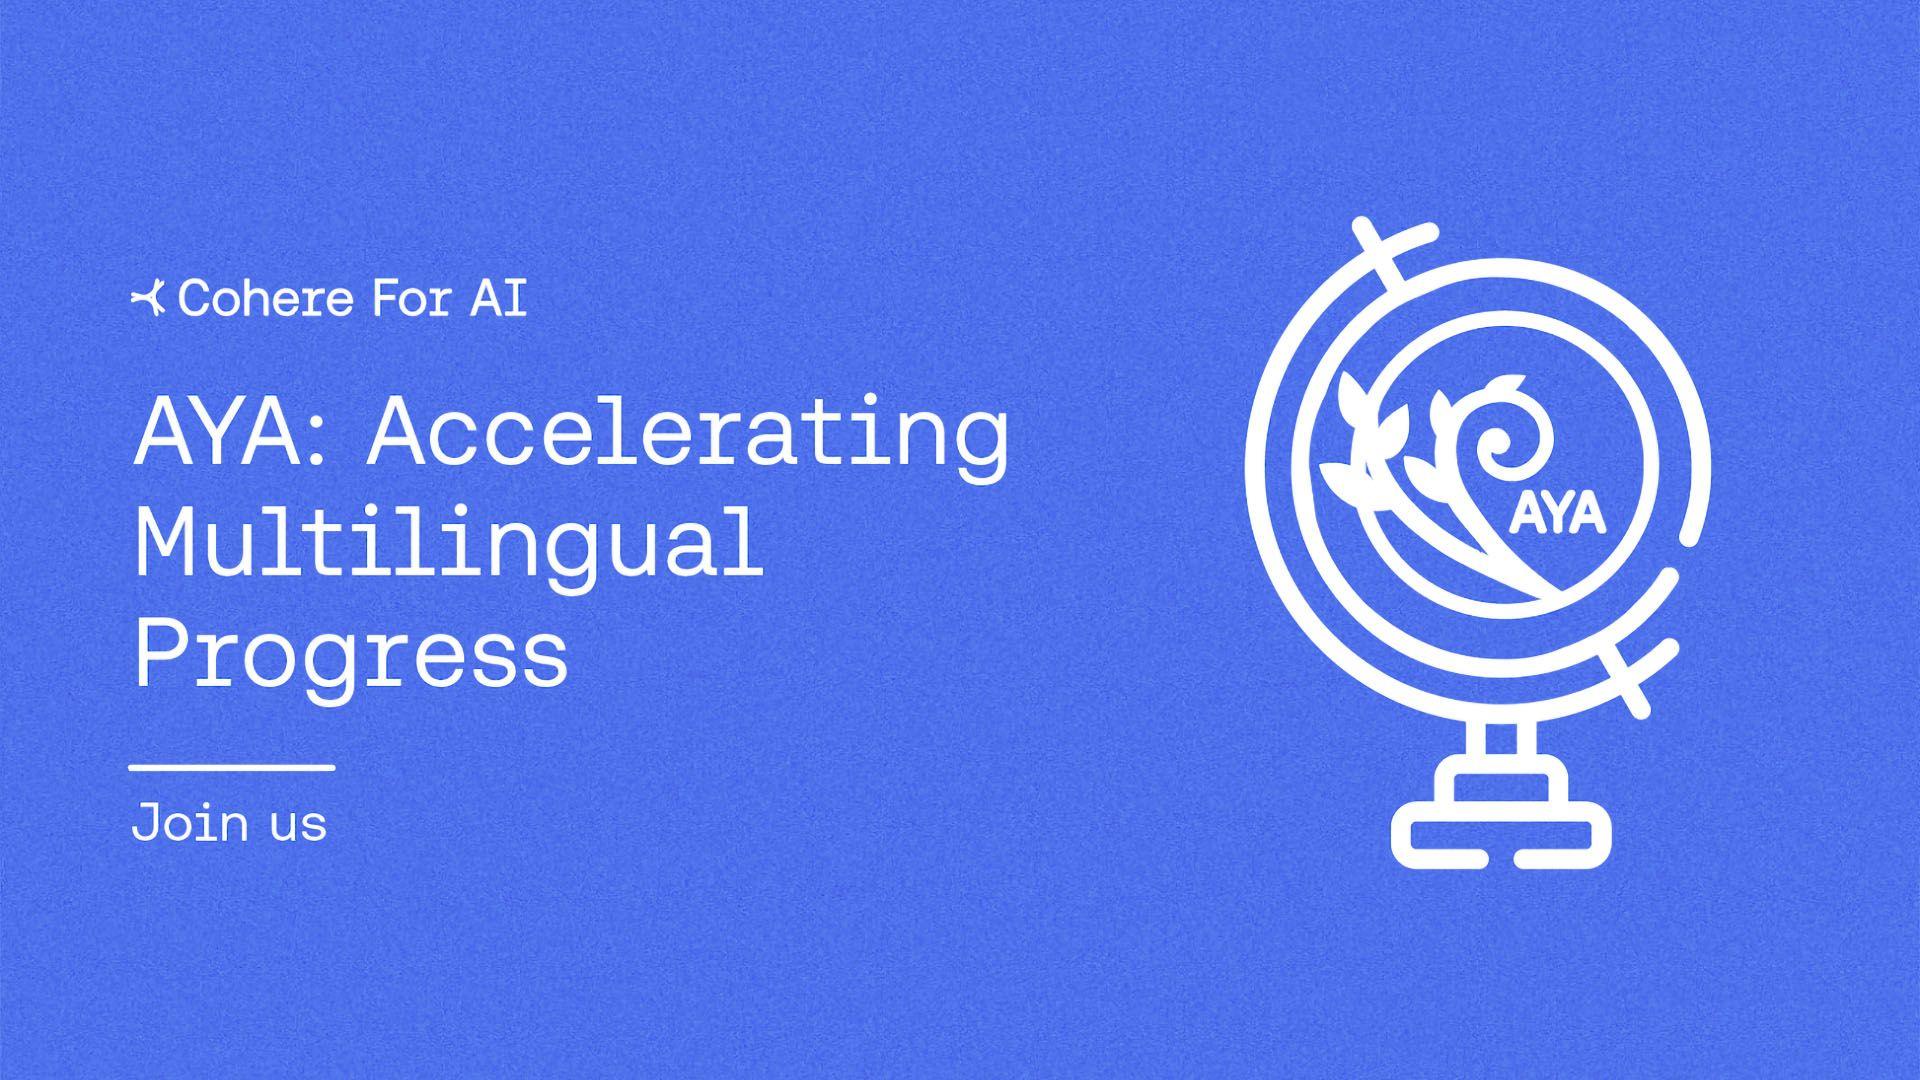 Introducing Aya: An Open Science Initiative to Accelerate Multilingual AI Progress